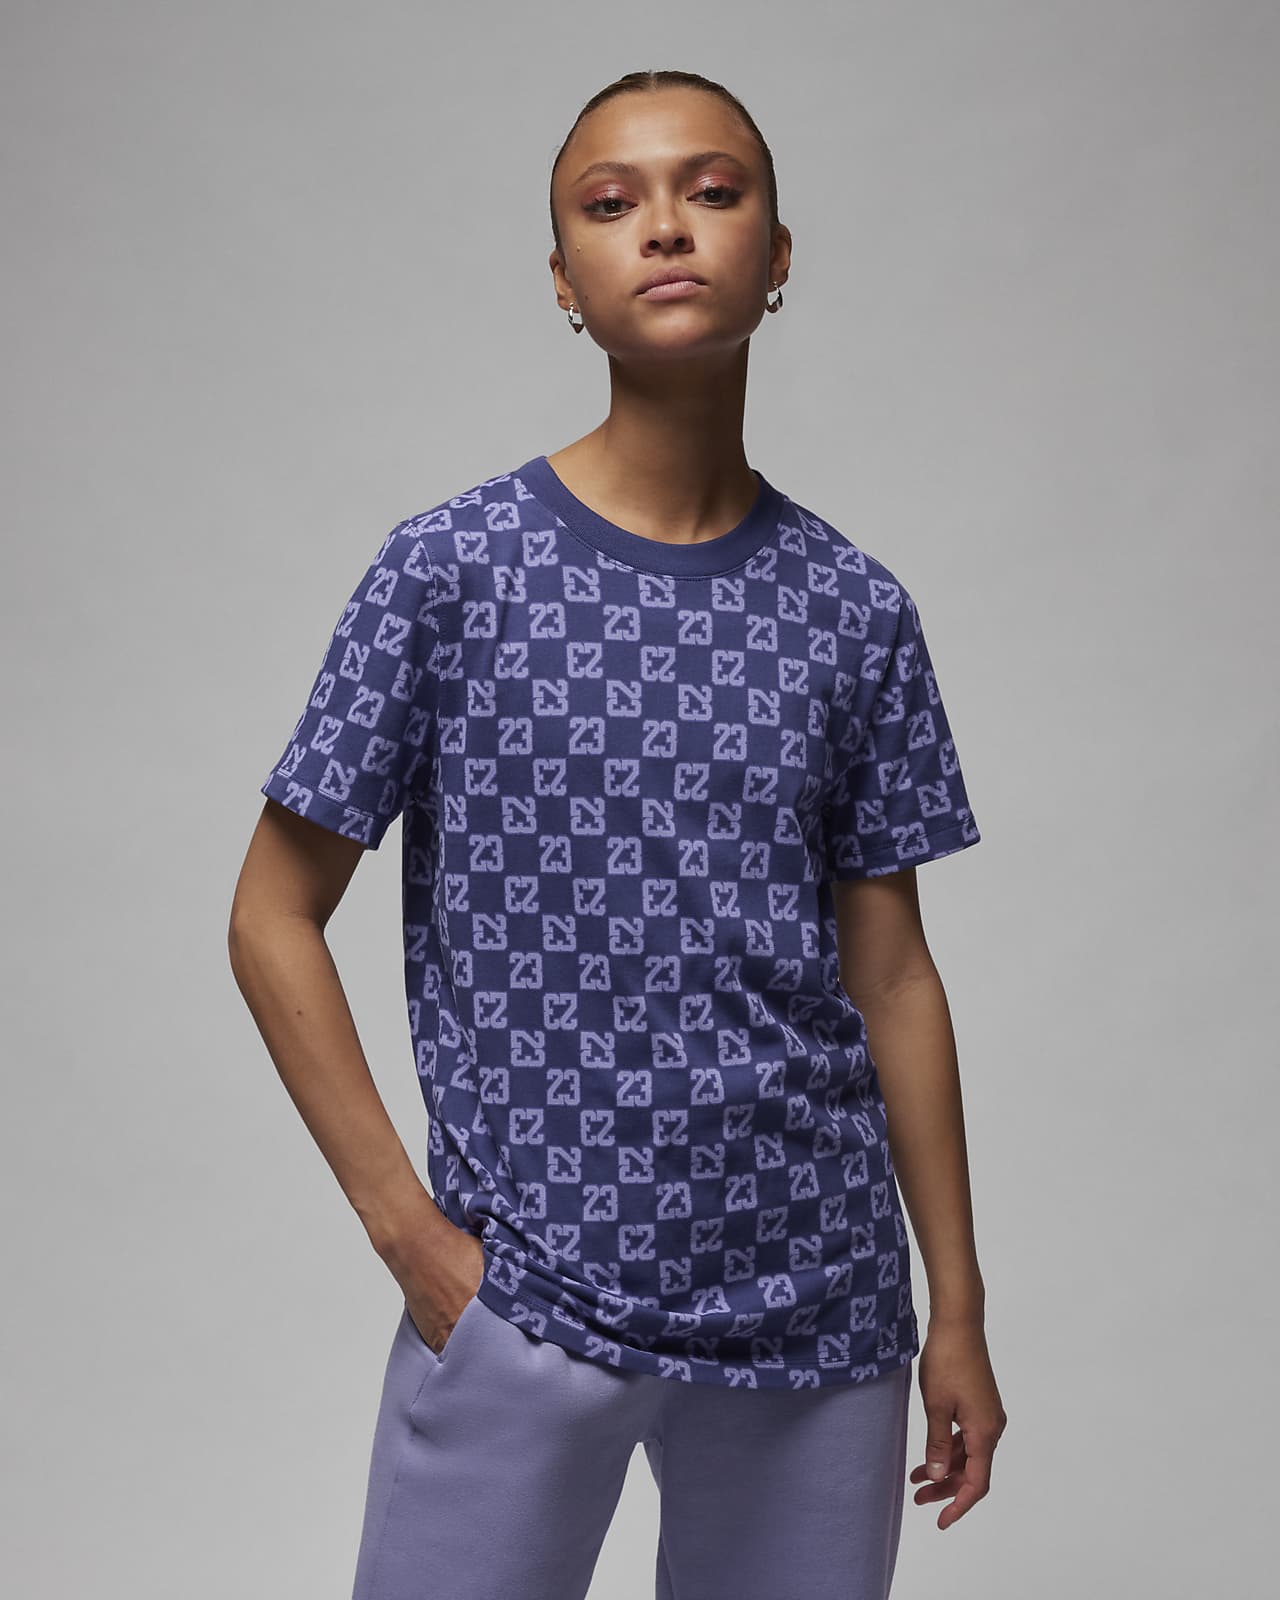 Louis Vuitton Monogram Womens T-shirts